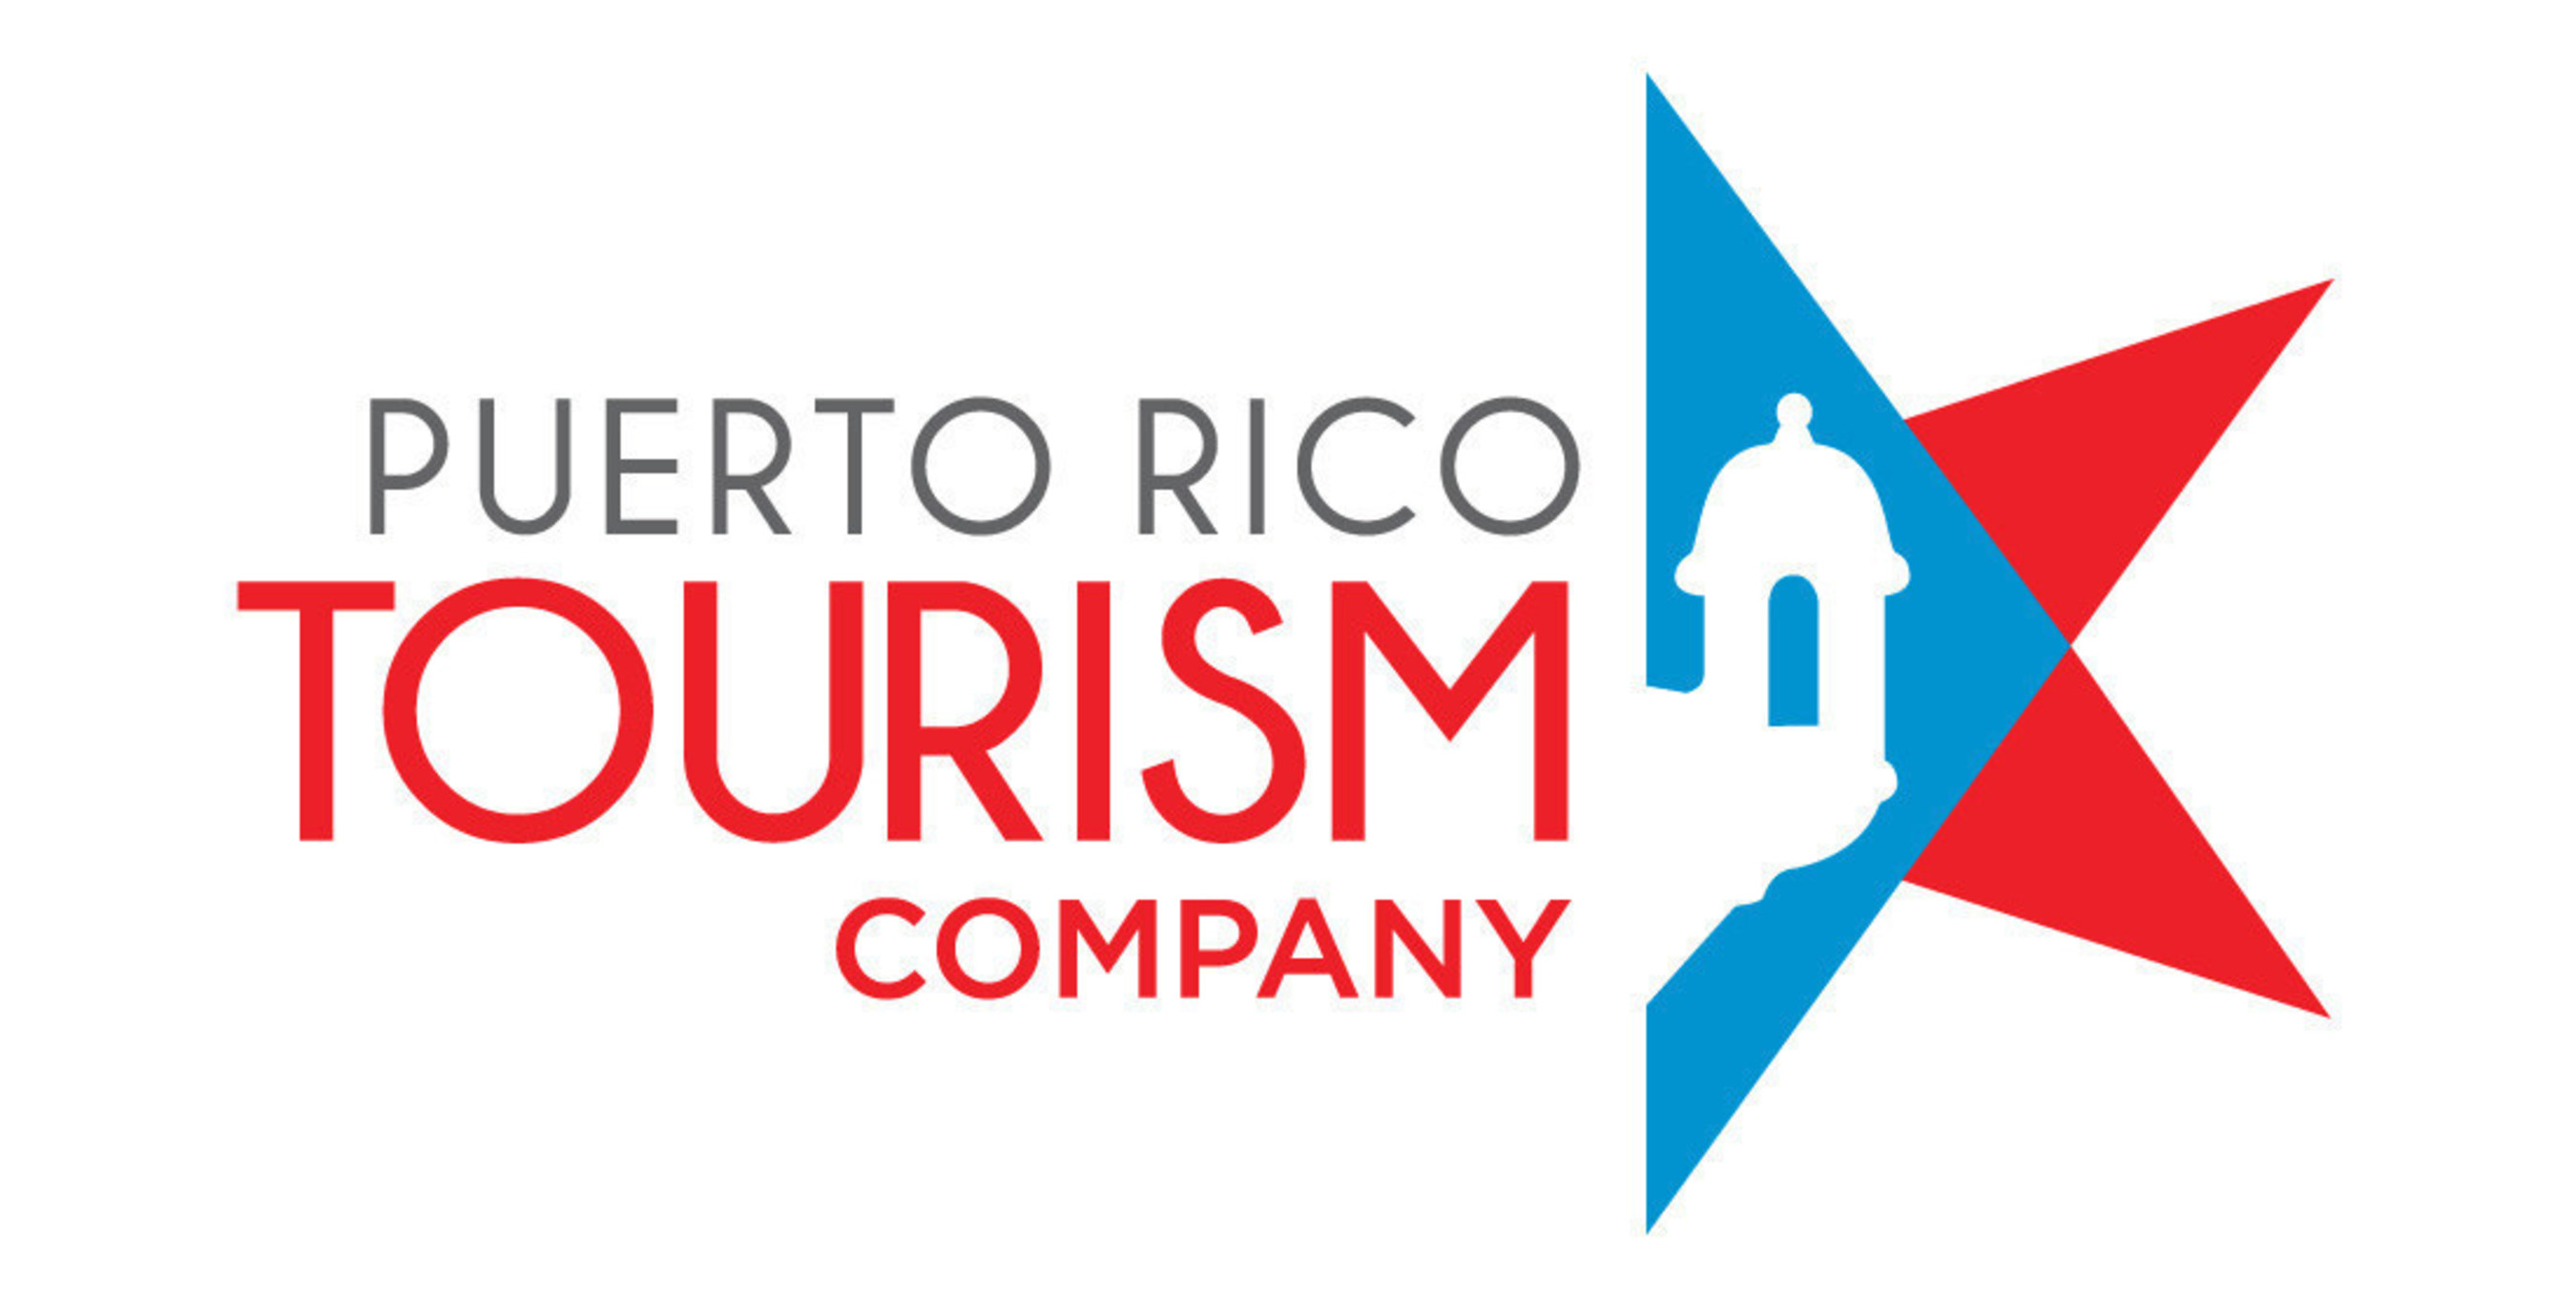 Official Logo of Puerto Rico Tourism Company